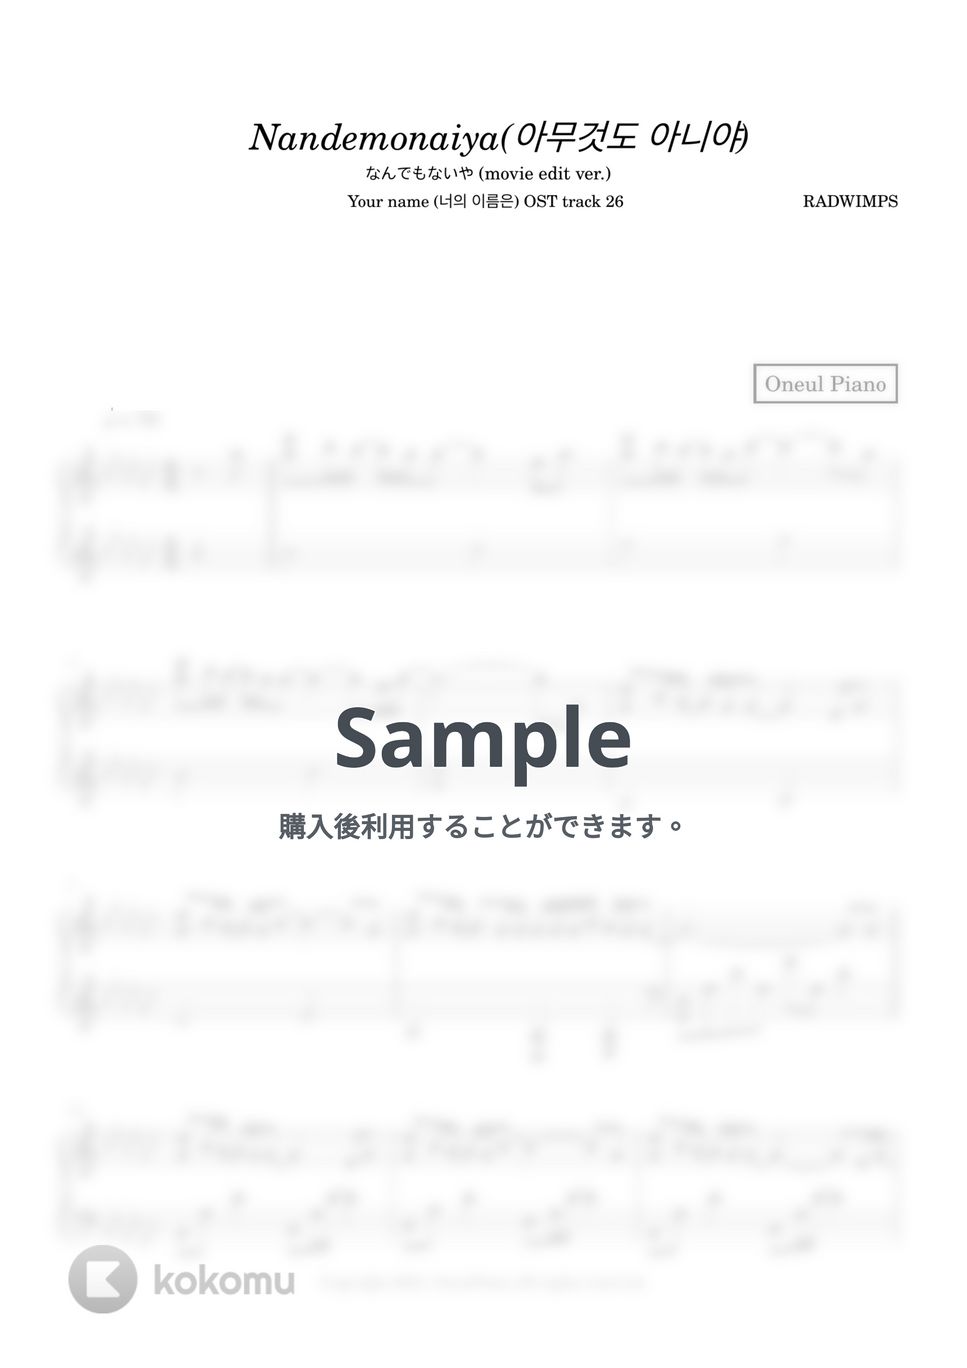 RADWIMPS - なんでもないや (movie edit)(Nandemonaiya) (君の名は OST track 26) by 今日ピアノ(Oneul Piano)